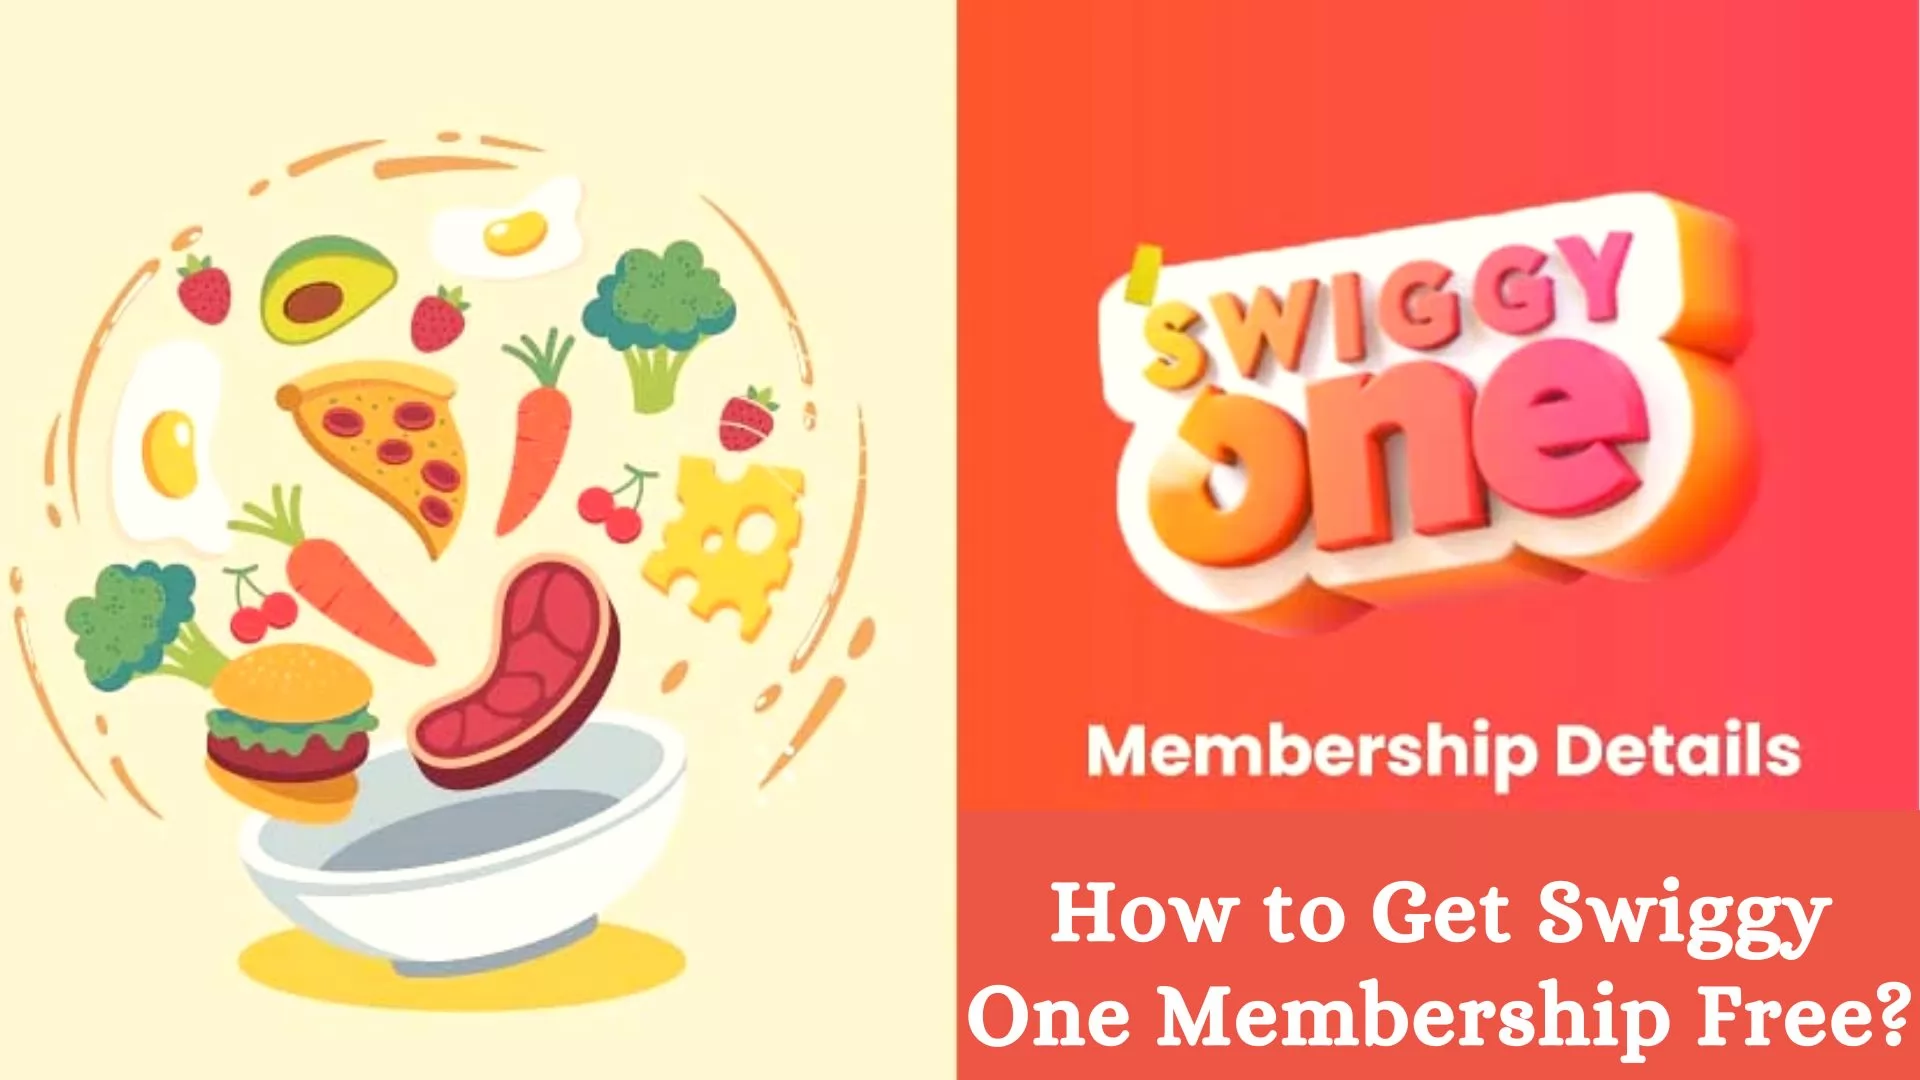 How to Get Swiggy One Membership Free?